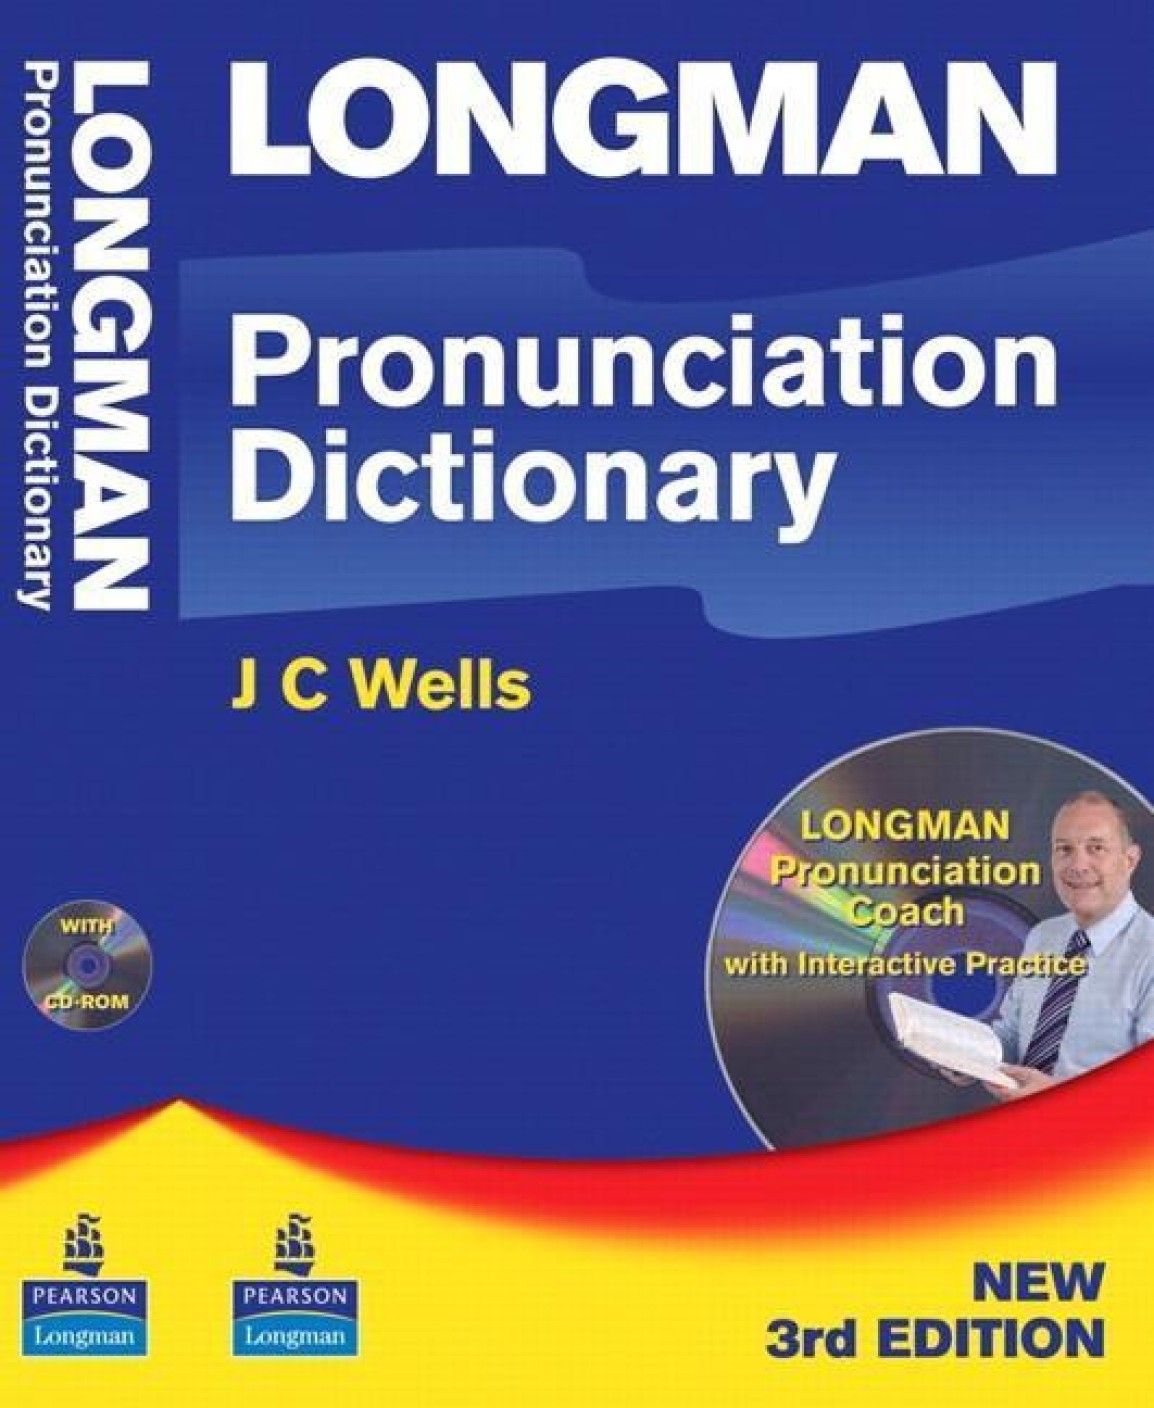 wells jc longman pronunciation dictionary